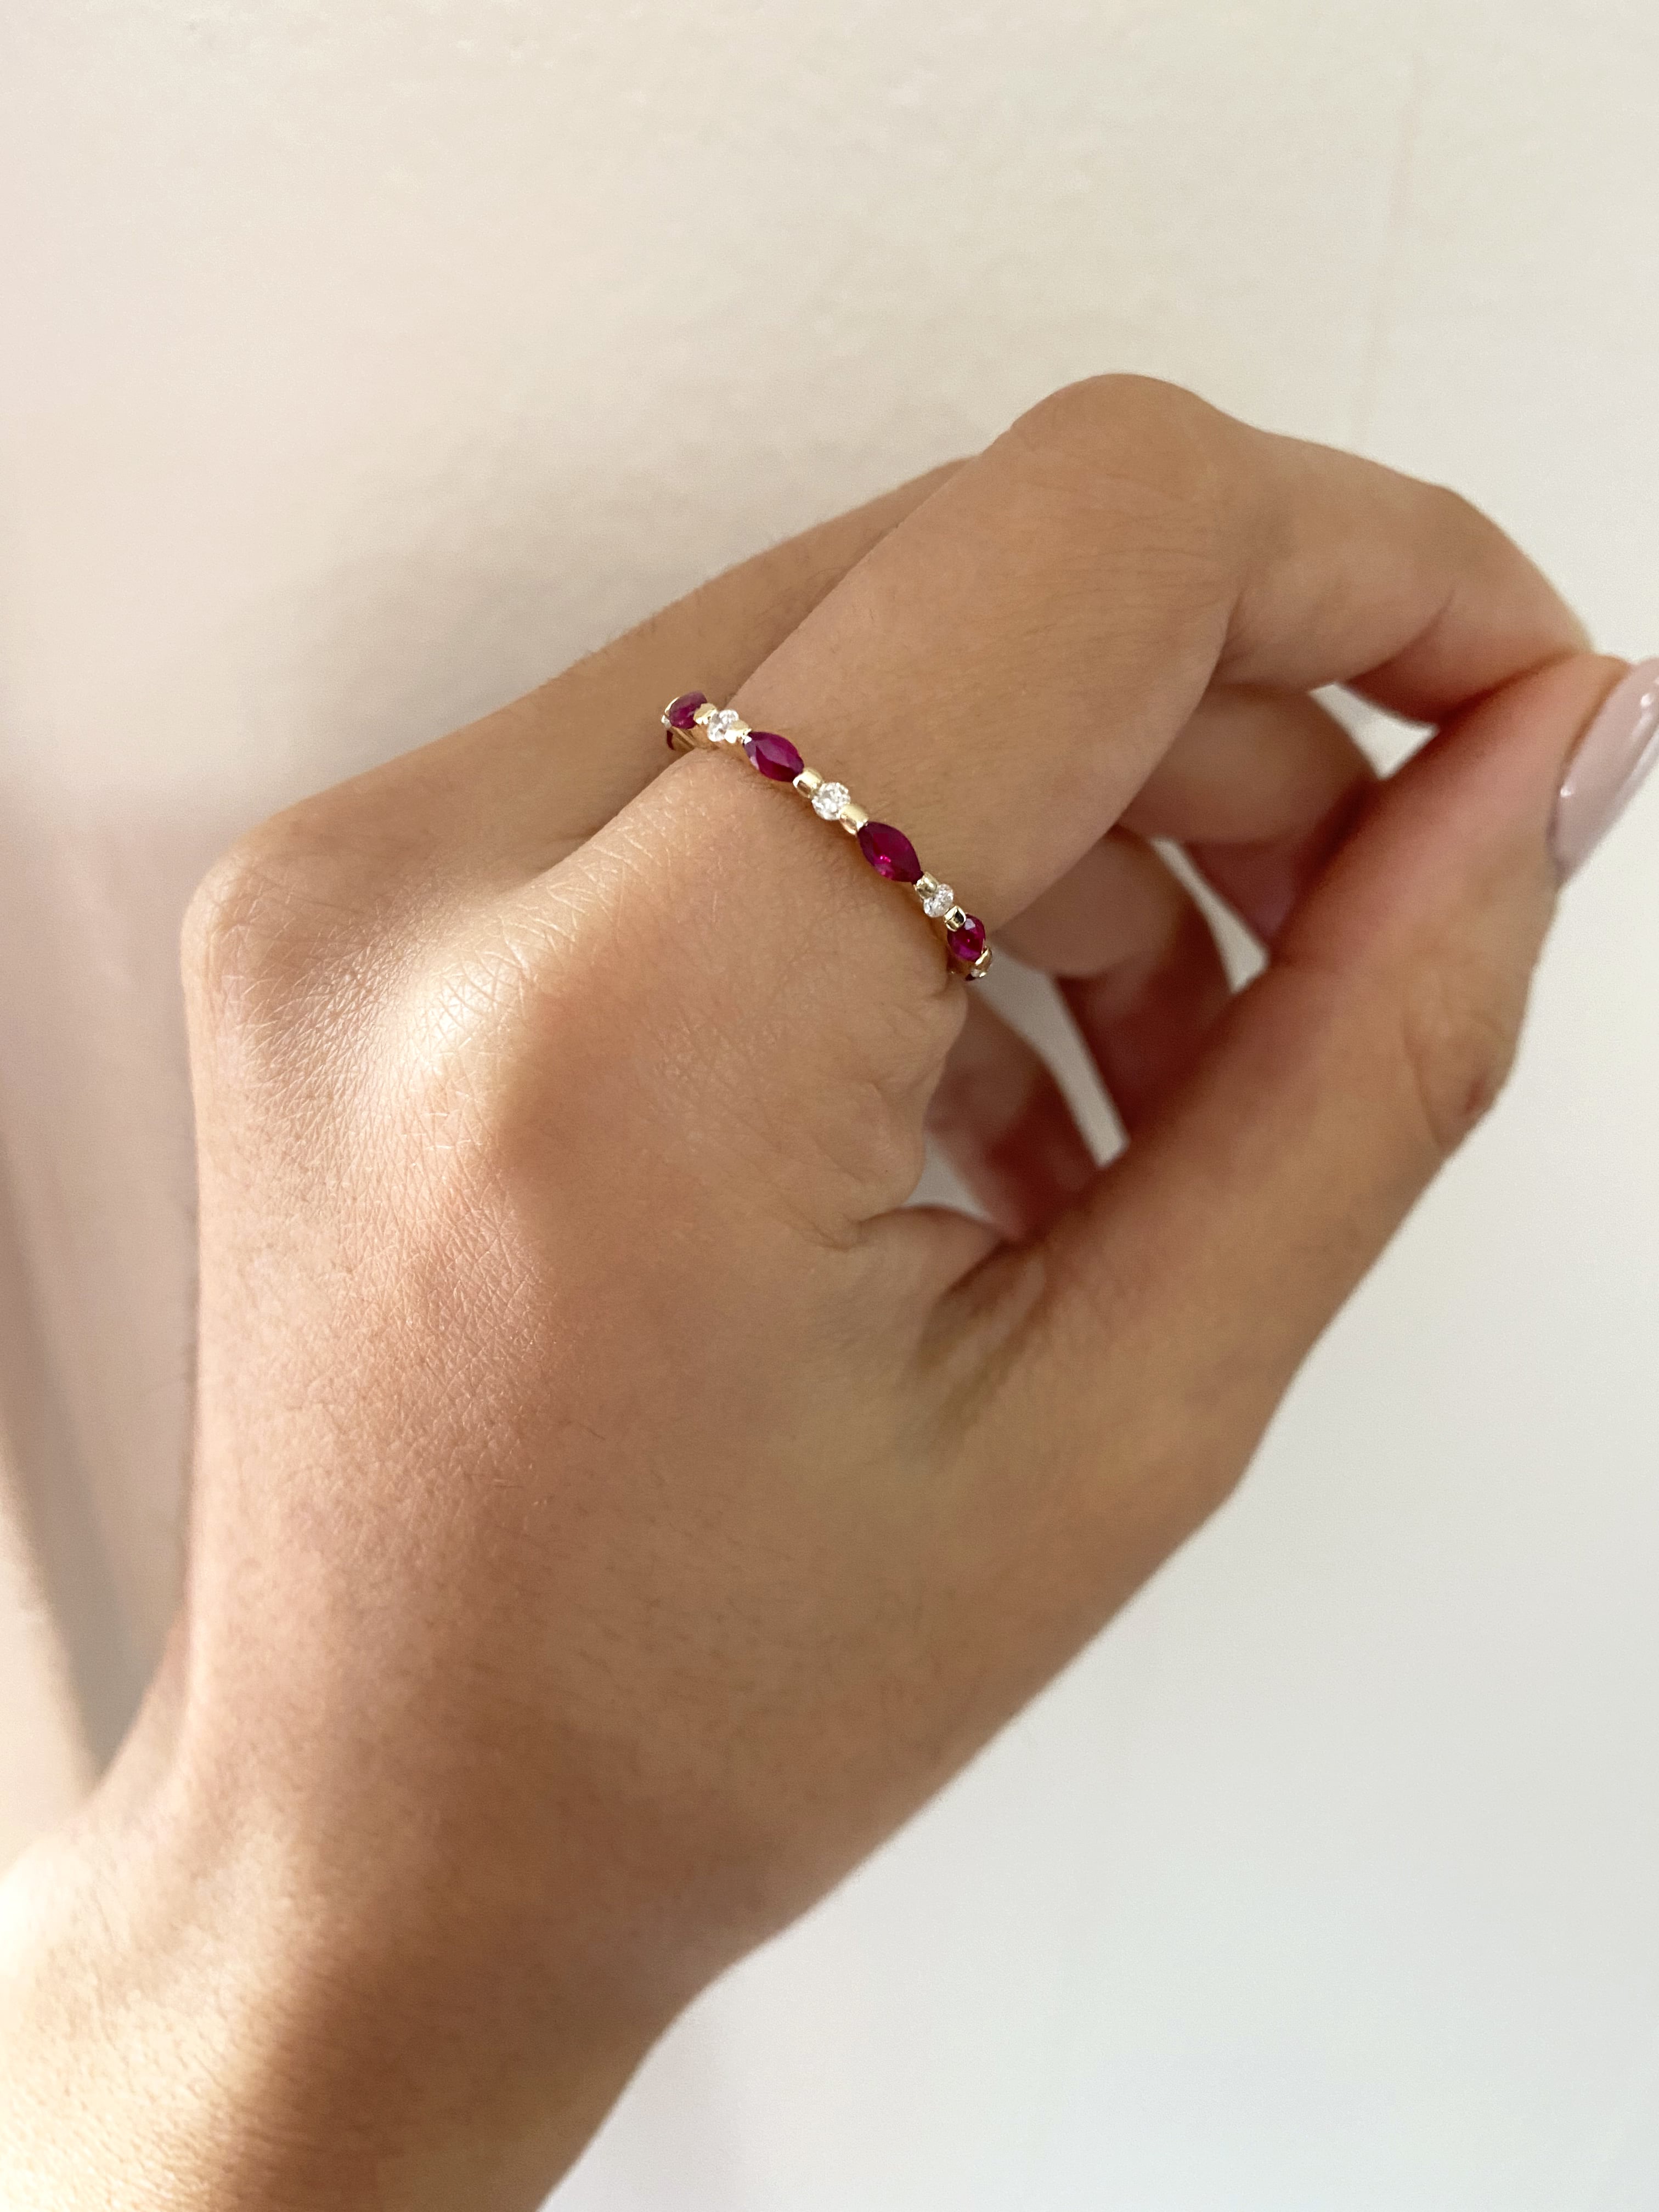 Antique Diamond & Ruby Bridal Wedding Ring Set 14k White Gold 2.75ct - U3153